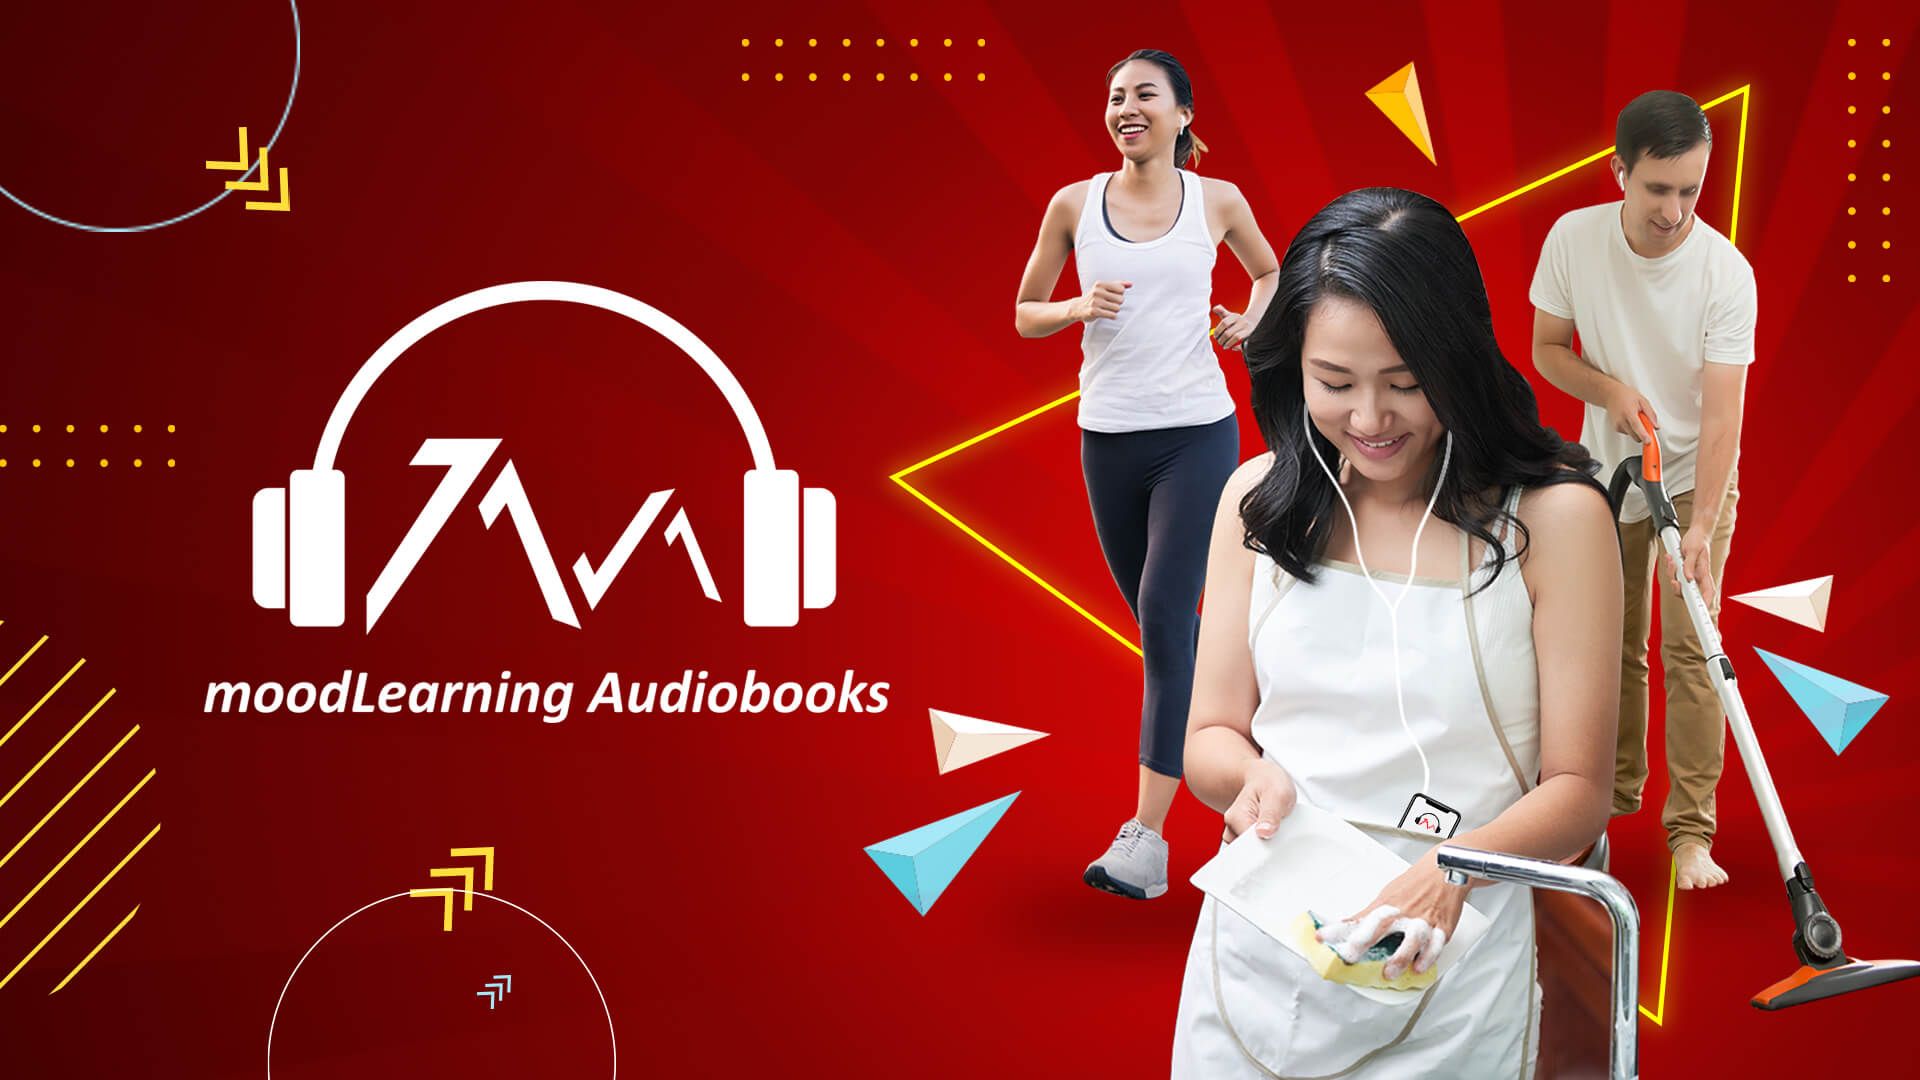 moodLearning audiobooks @literature.ph